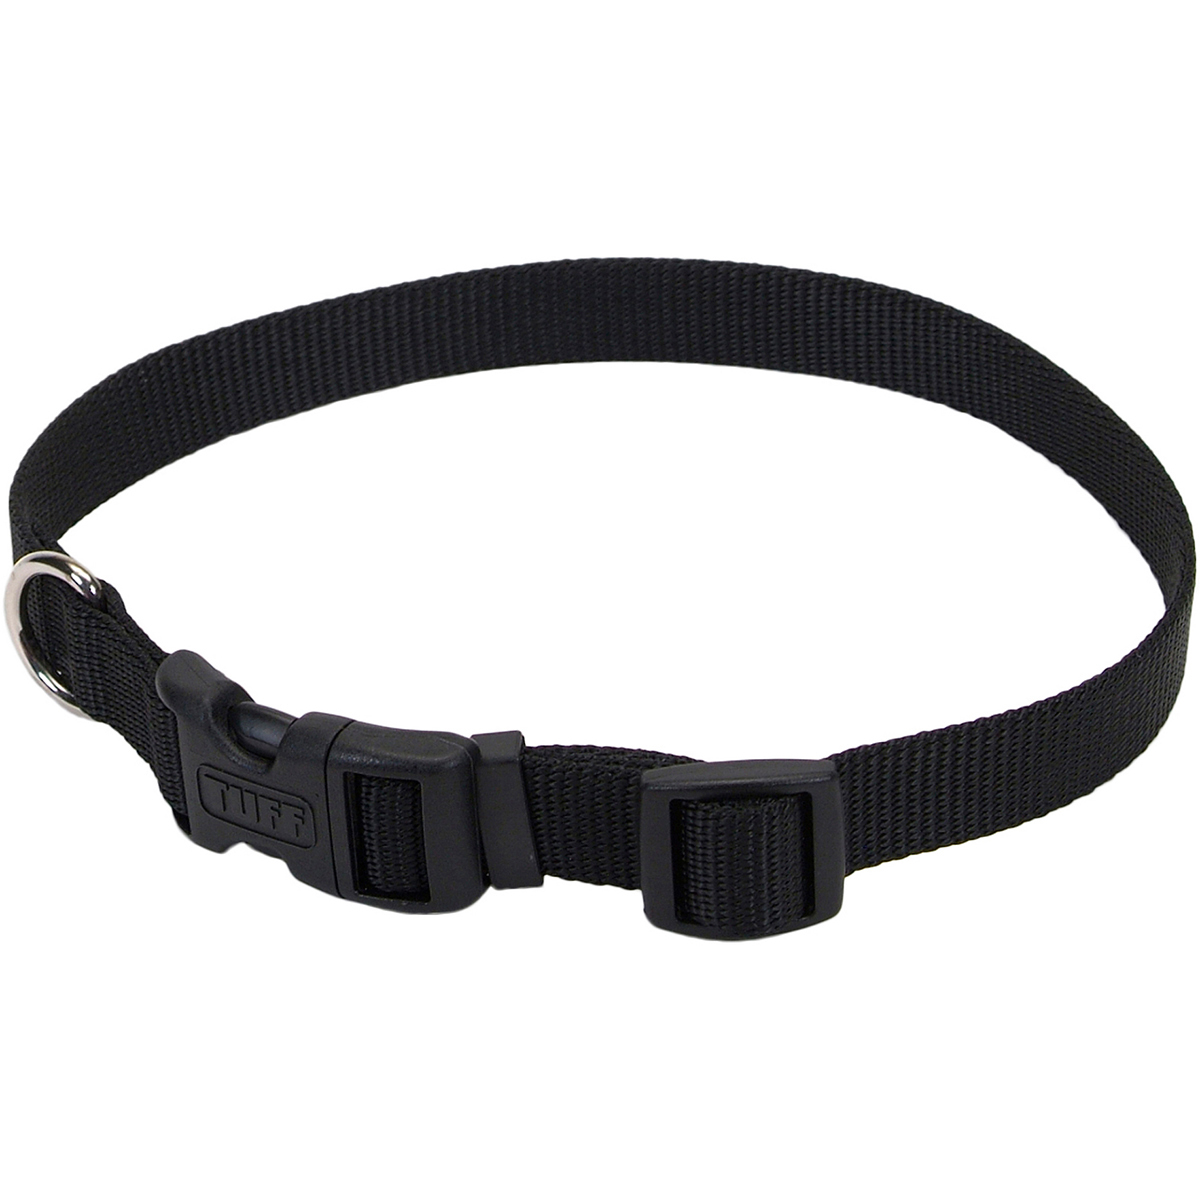 0.62 X 10 - 14 In. Adjustable Nylon Dog Collar With Tuff Buckle, Black